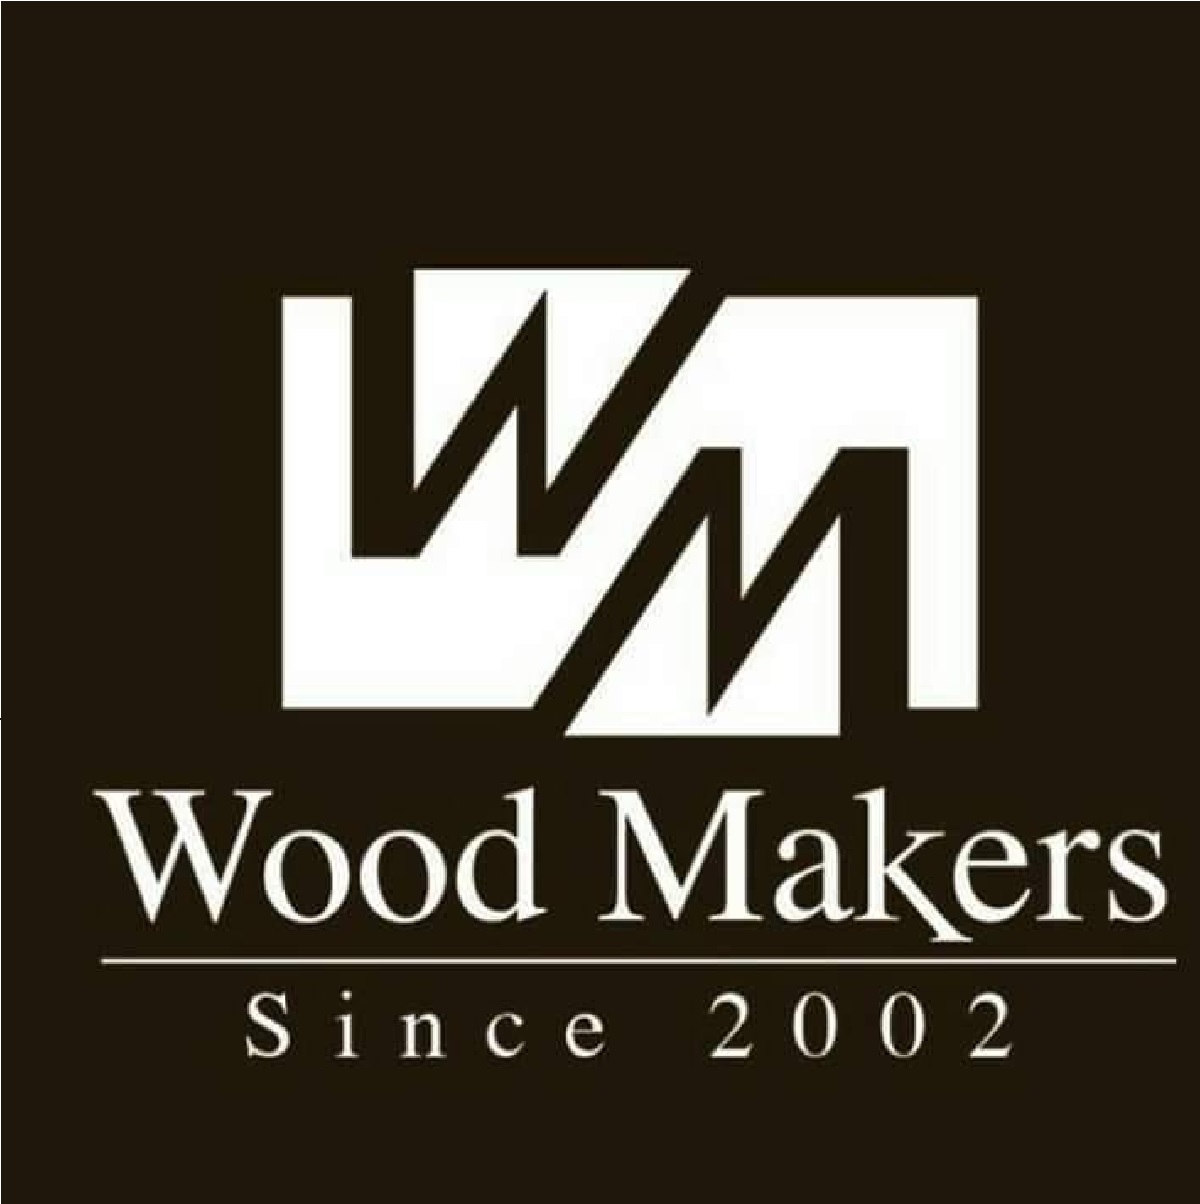 Woodmakers company